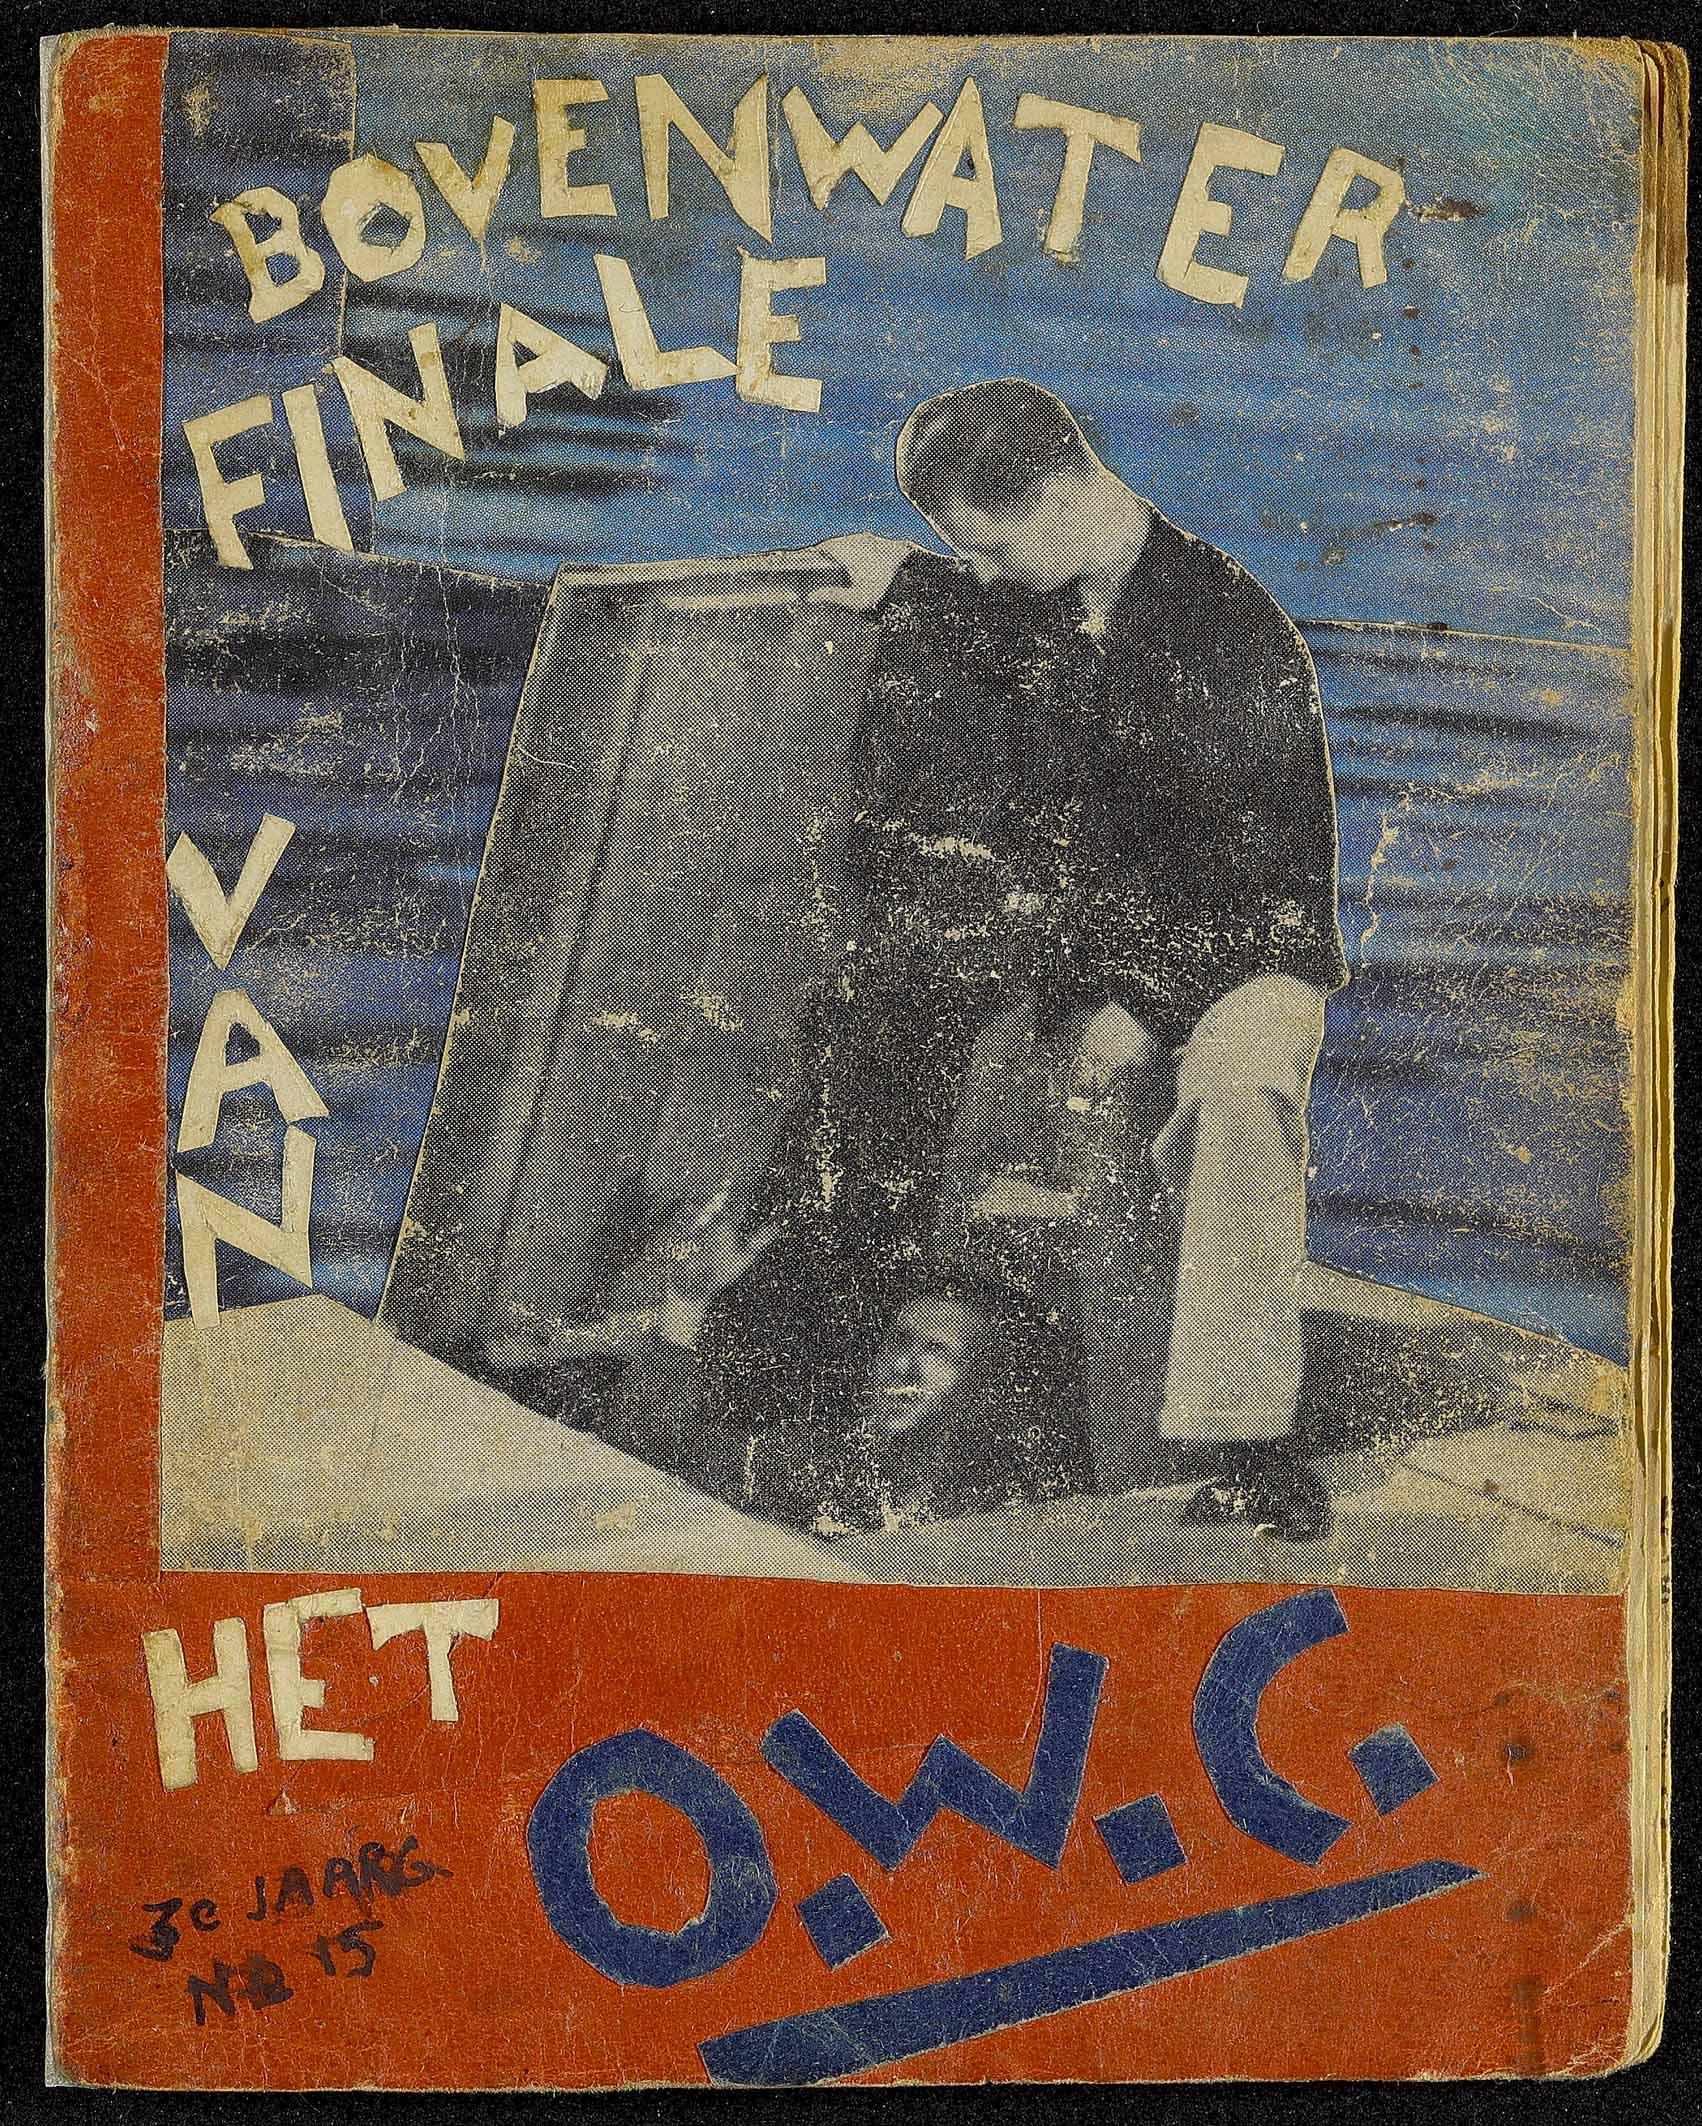 Curt Bloch, Het Onderwater Cabaret, Magazine cover from 03.04.1945